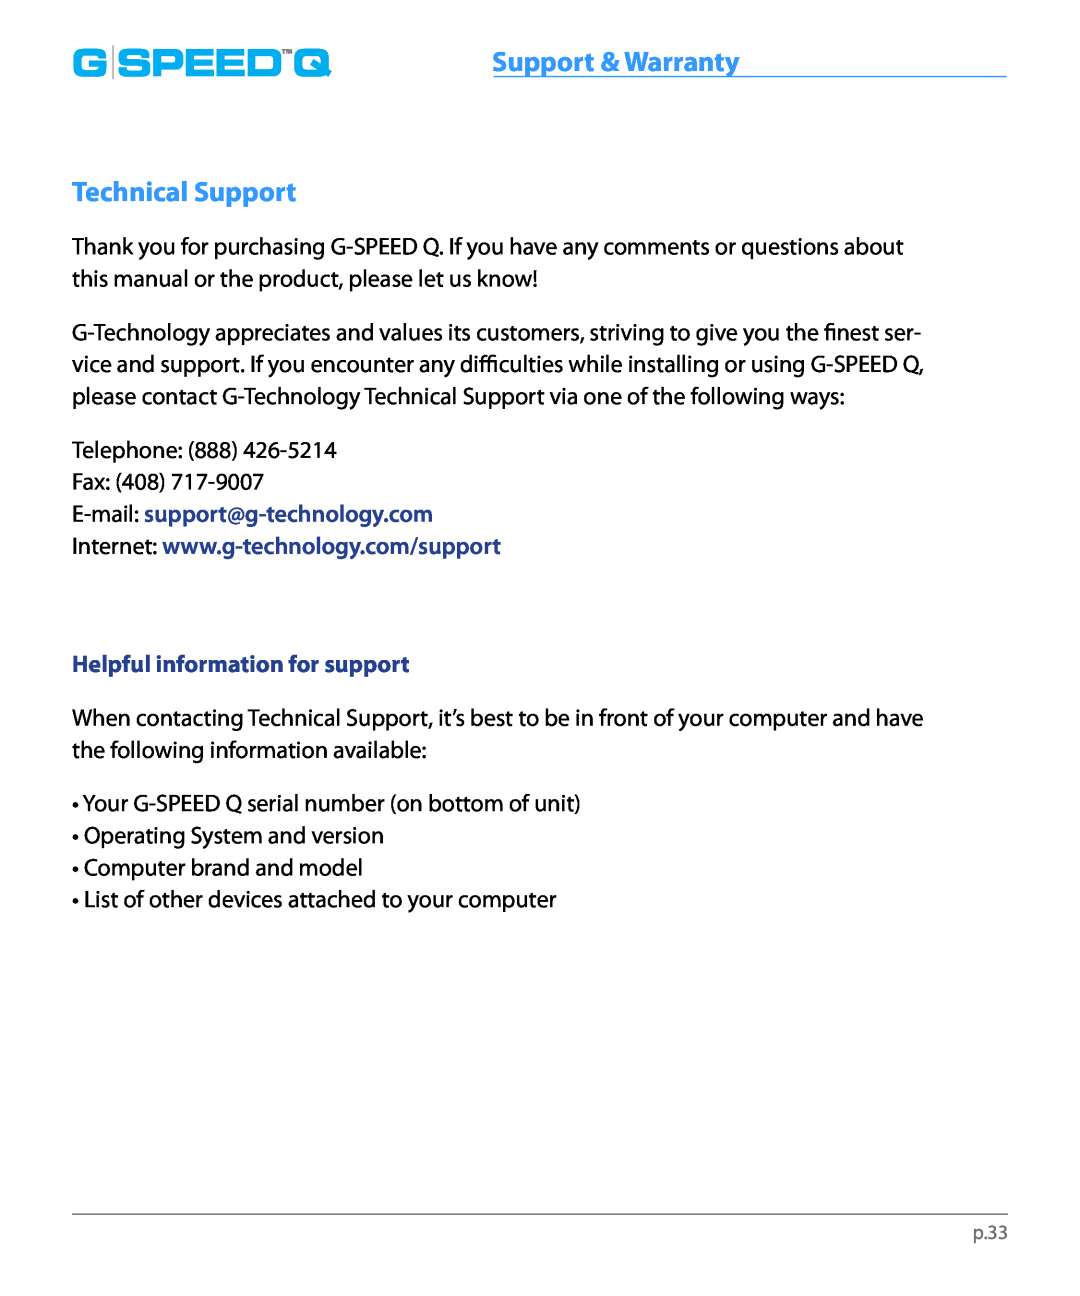 G-Technology 0G02319 manual Technical Support, Support & Warranty, E-mail support@g-technology.com, G Speedq 